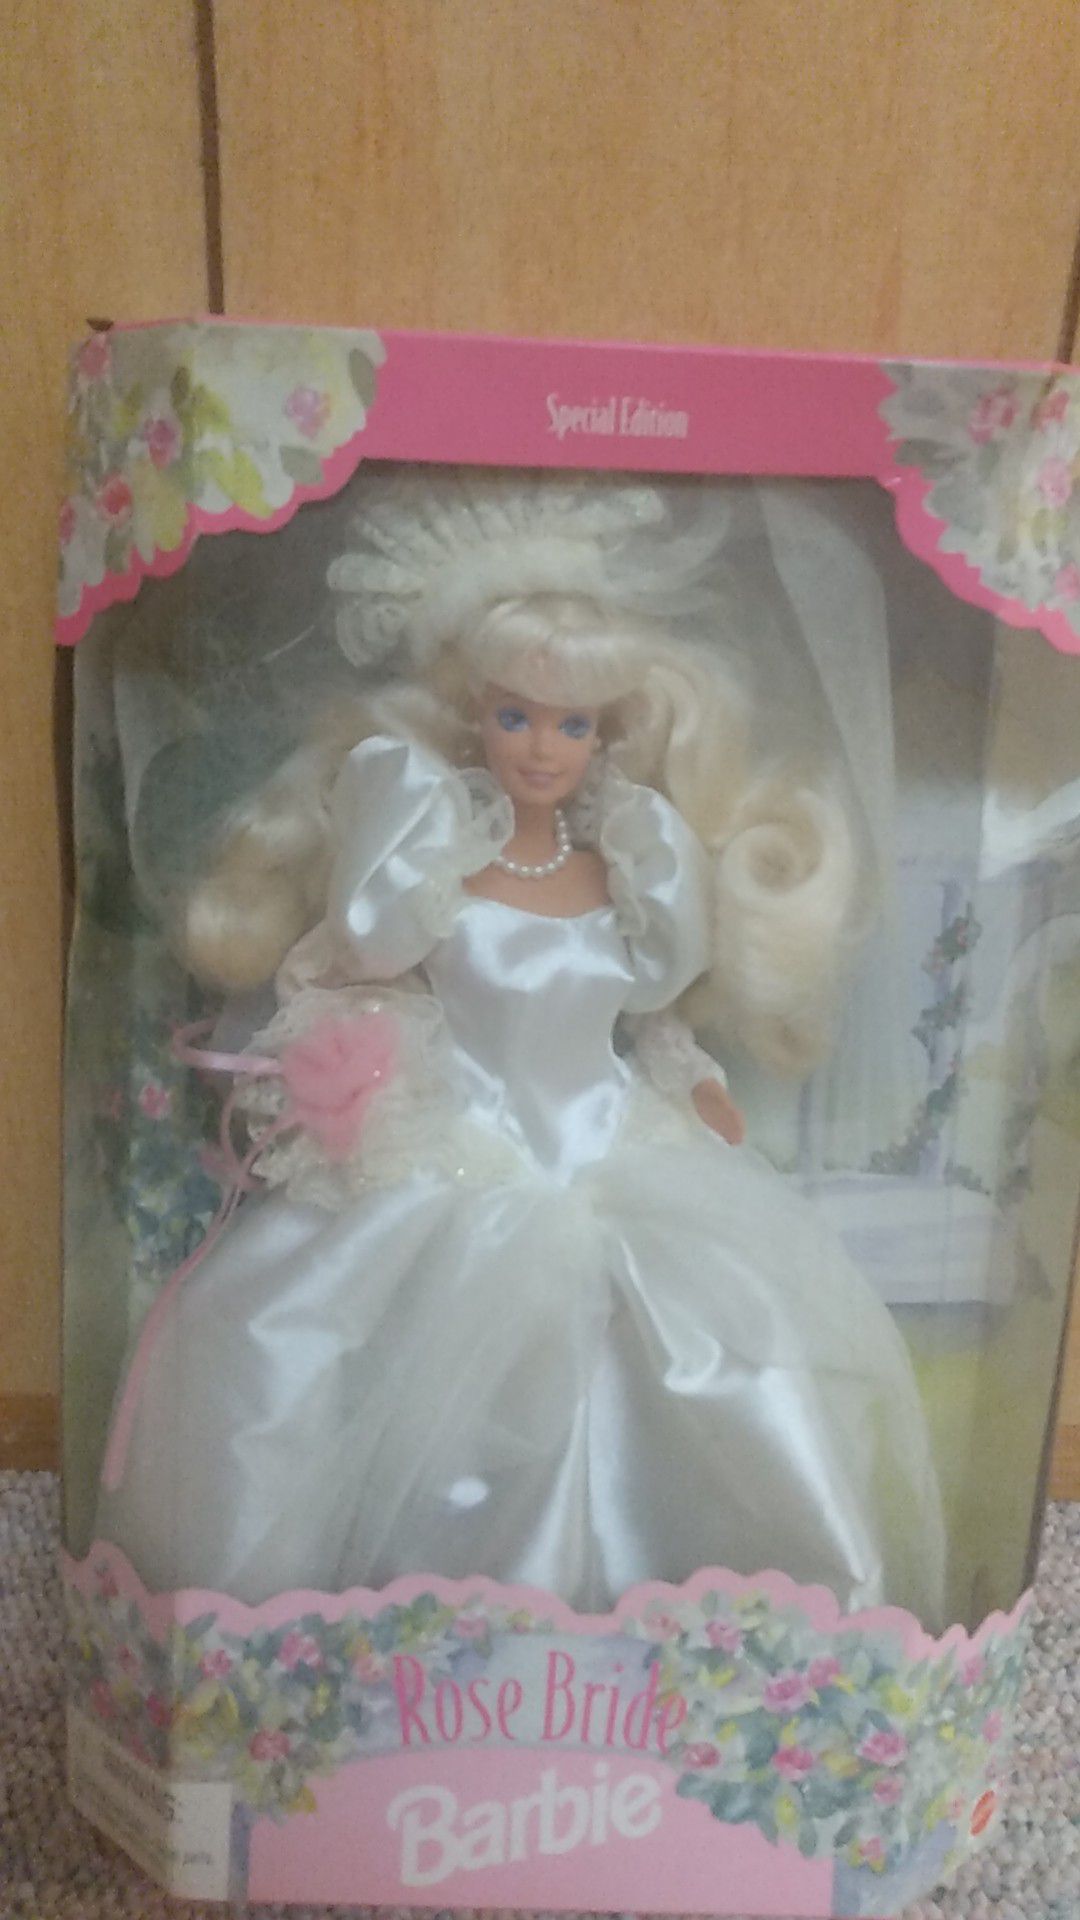 Brand New1996 Mattel Barbie Special Edition Rose Bride Barbie Doll